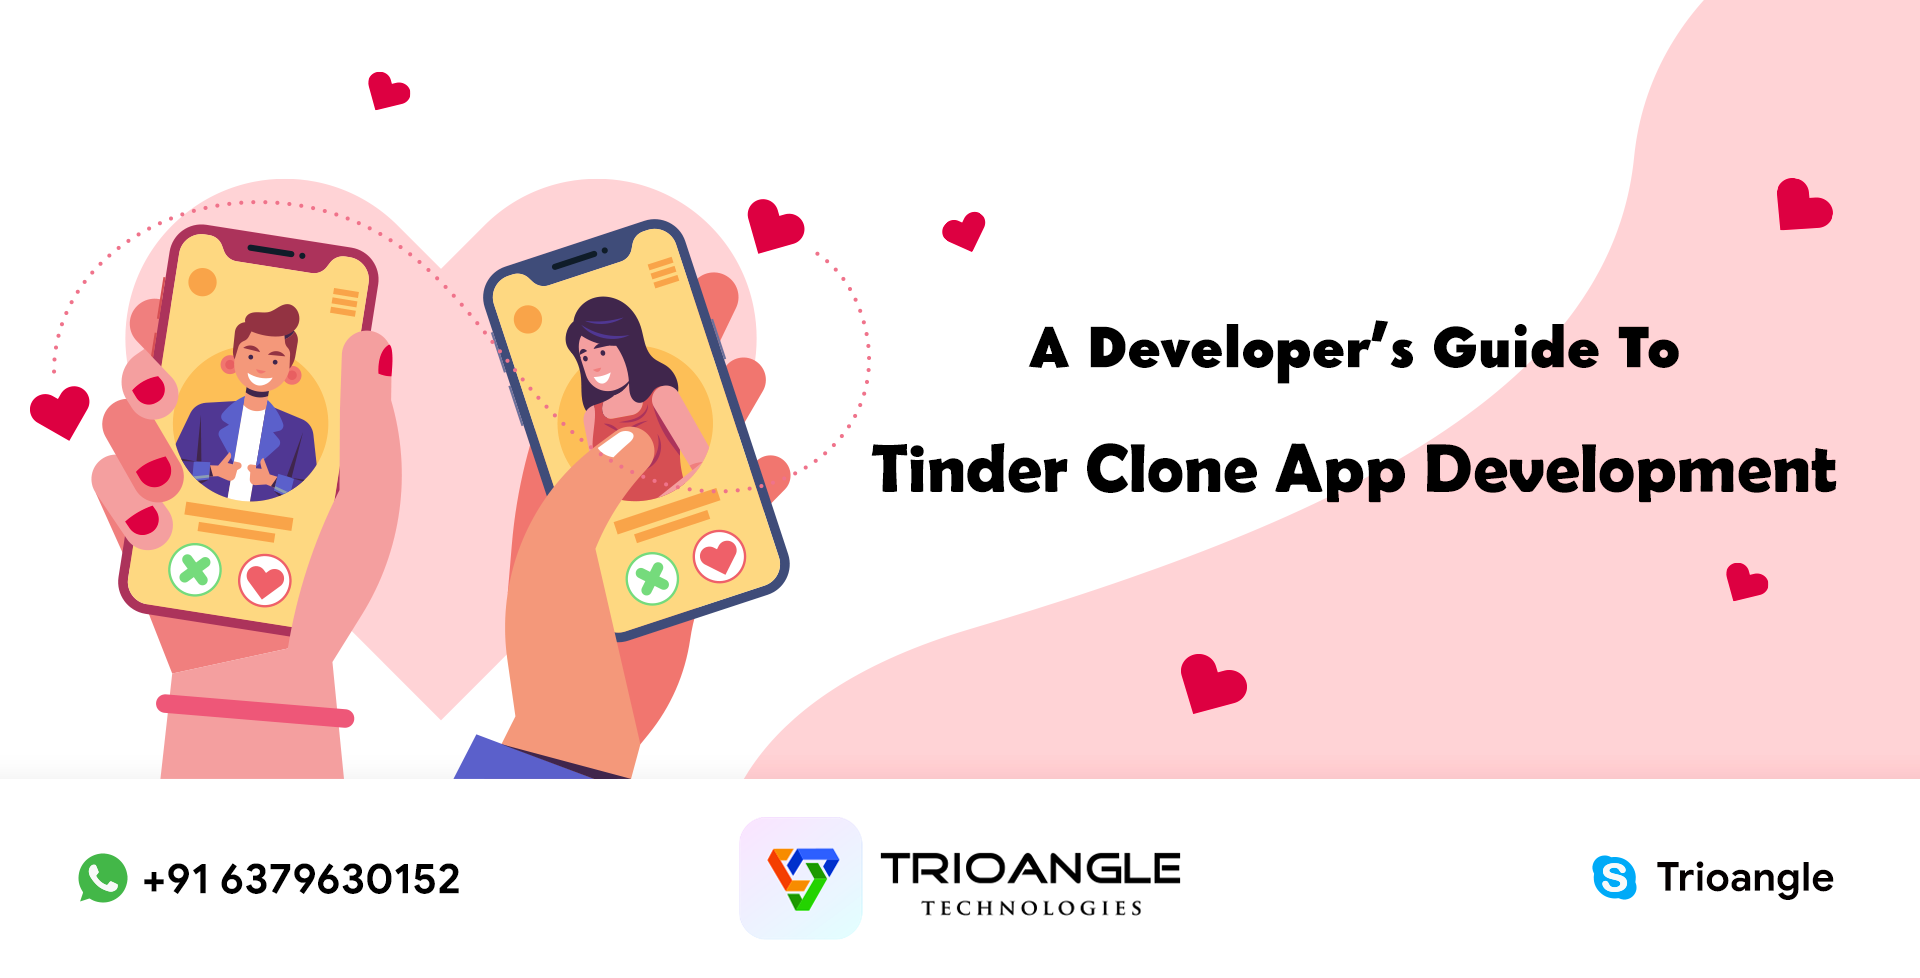 A Developer’s Guide To Tinder Clone App Development